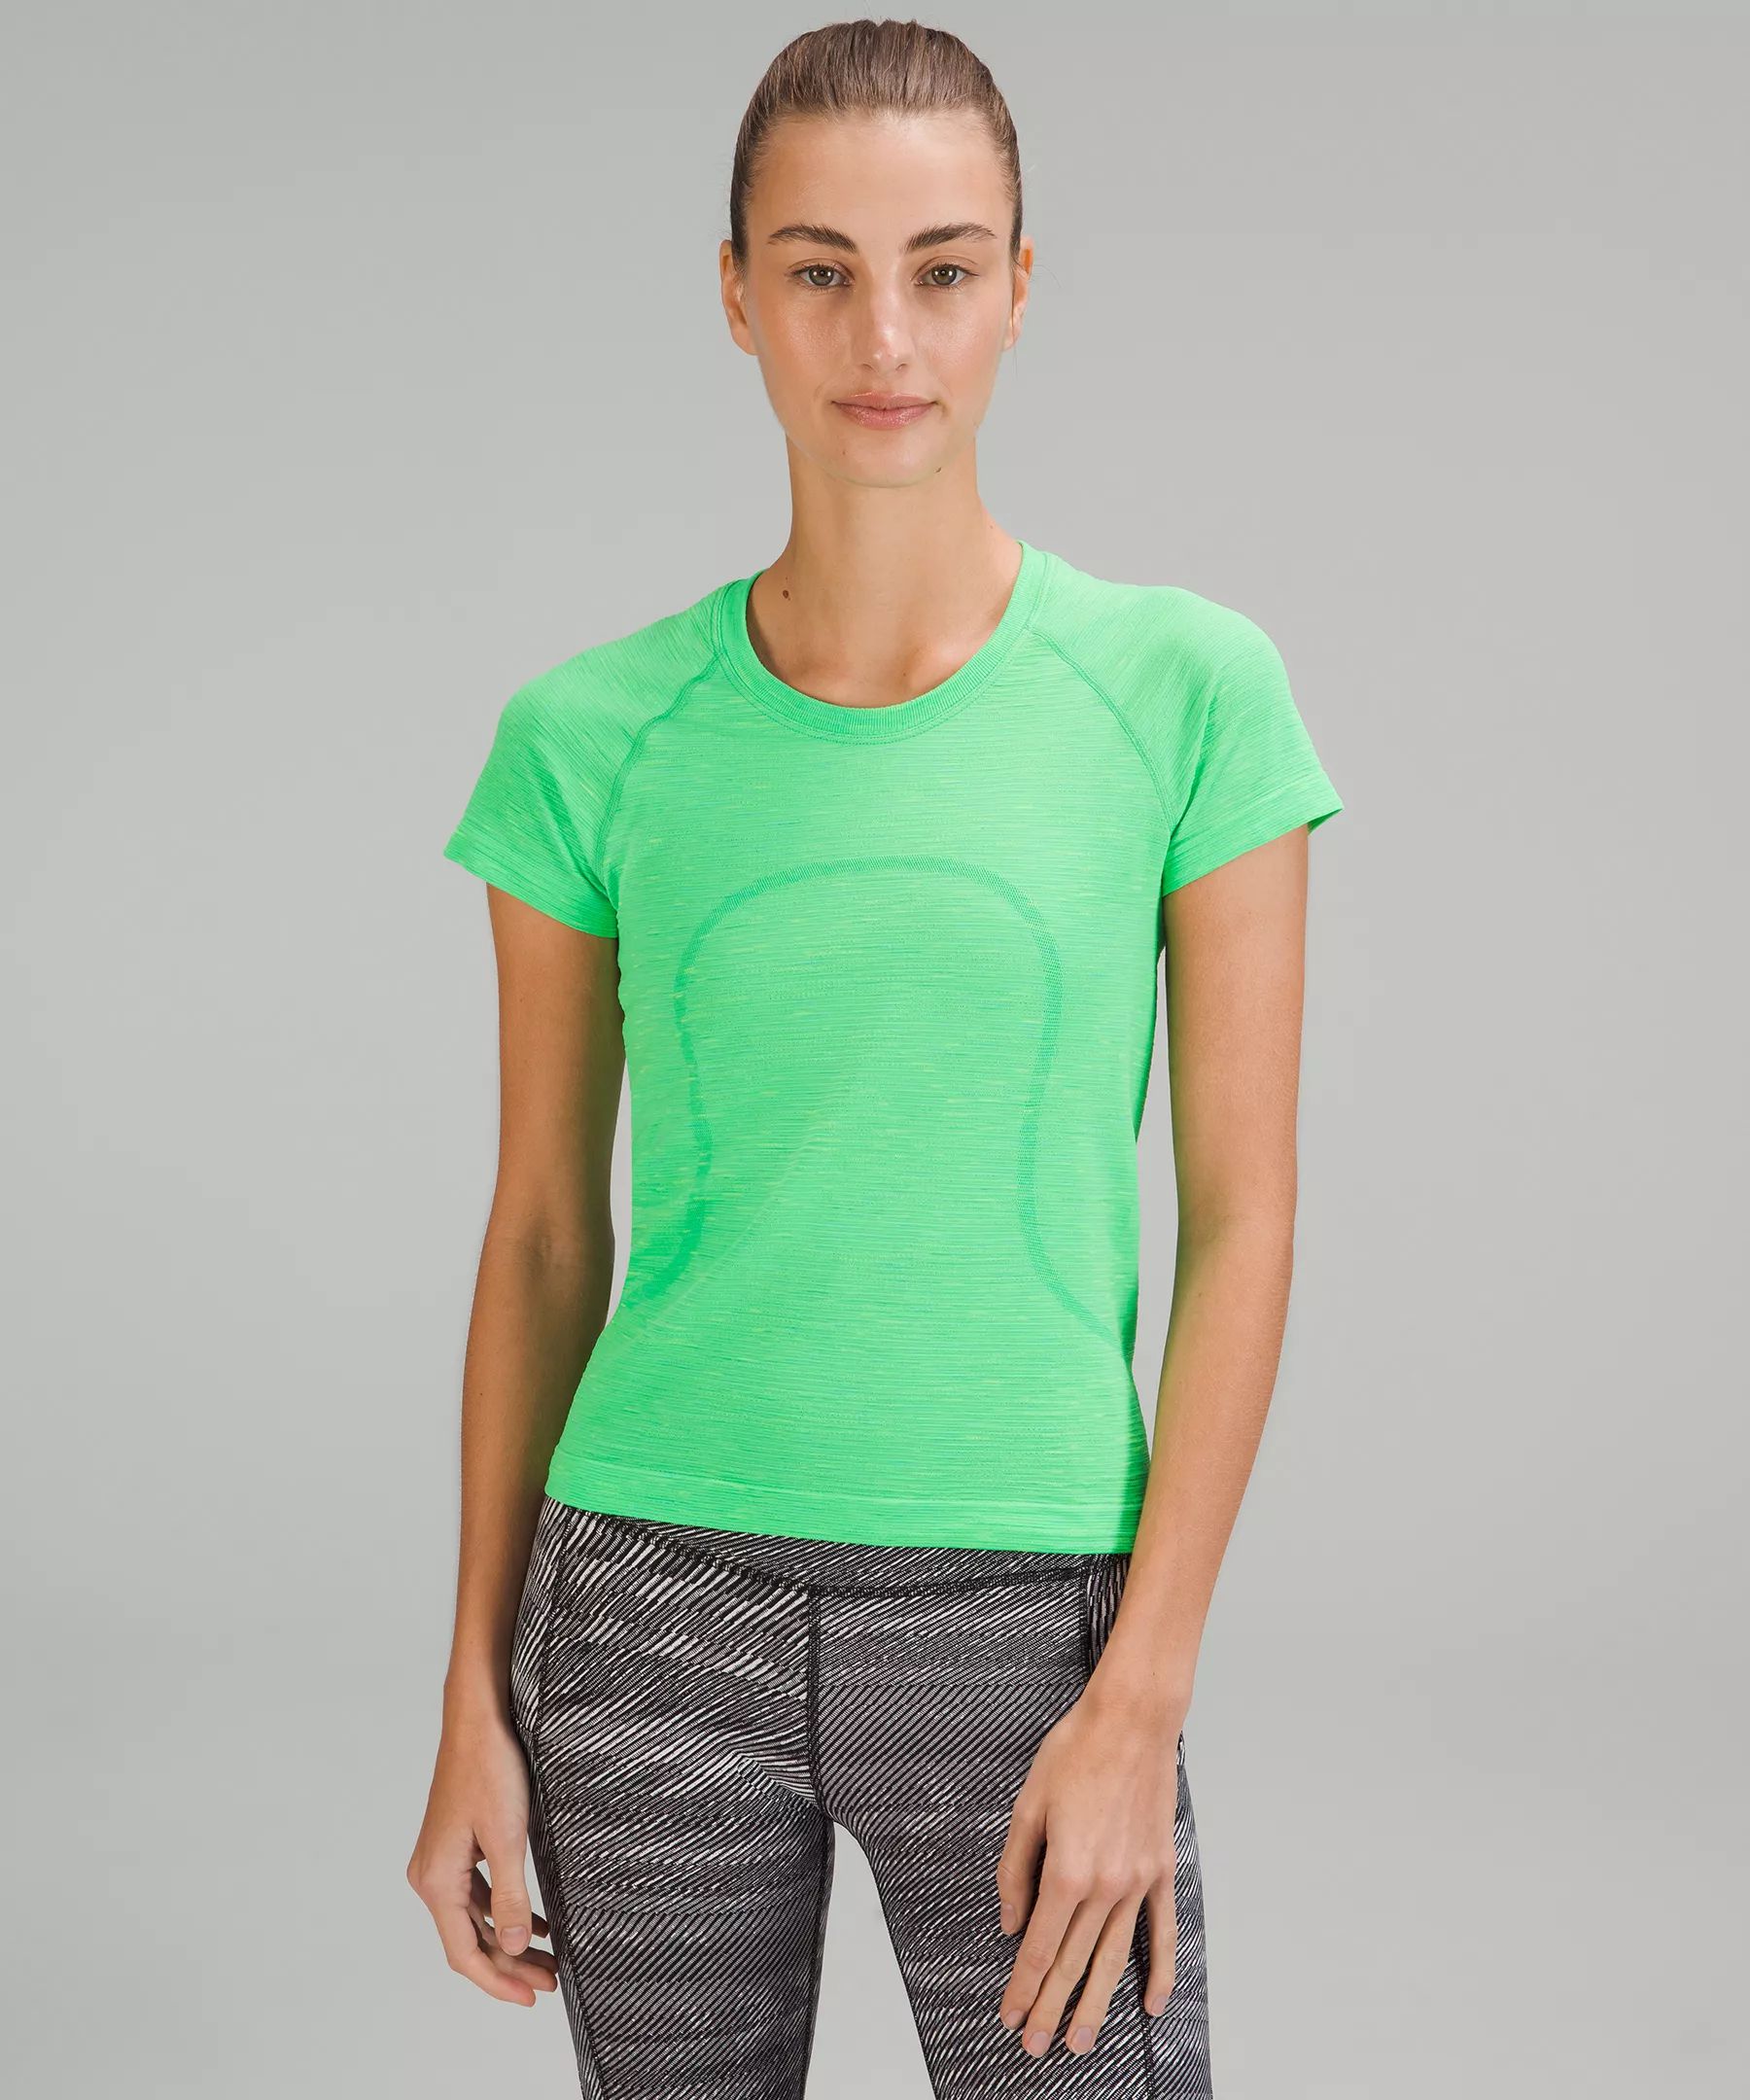 Limited Edition Swiftly Tech Short Sleeve Shirt Race Length | Lululemon (US)